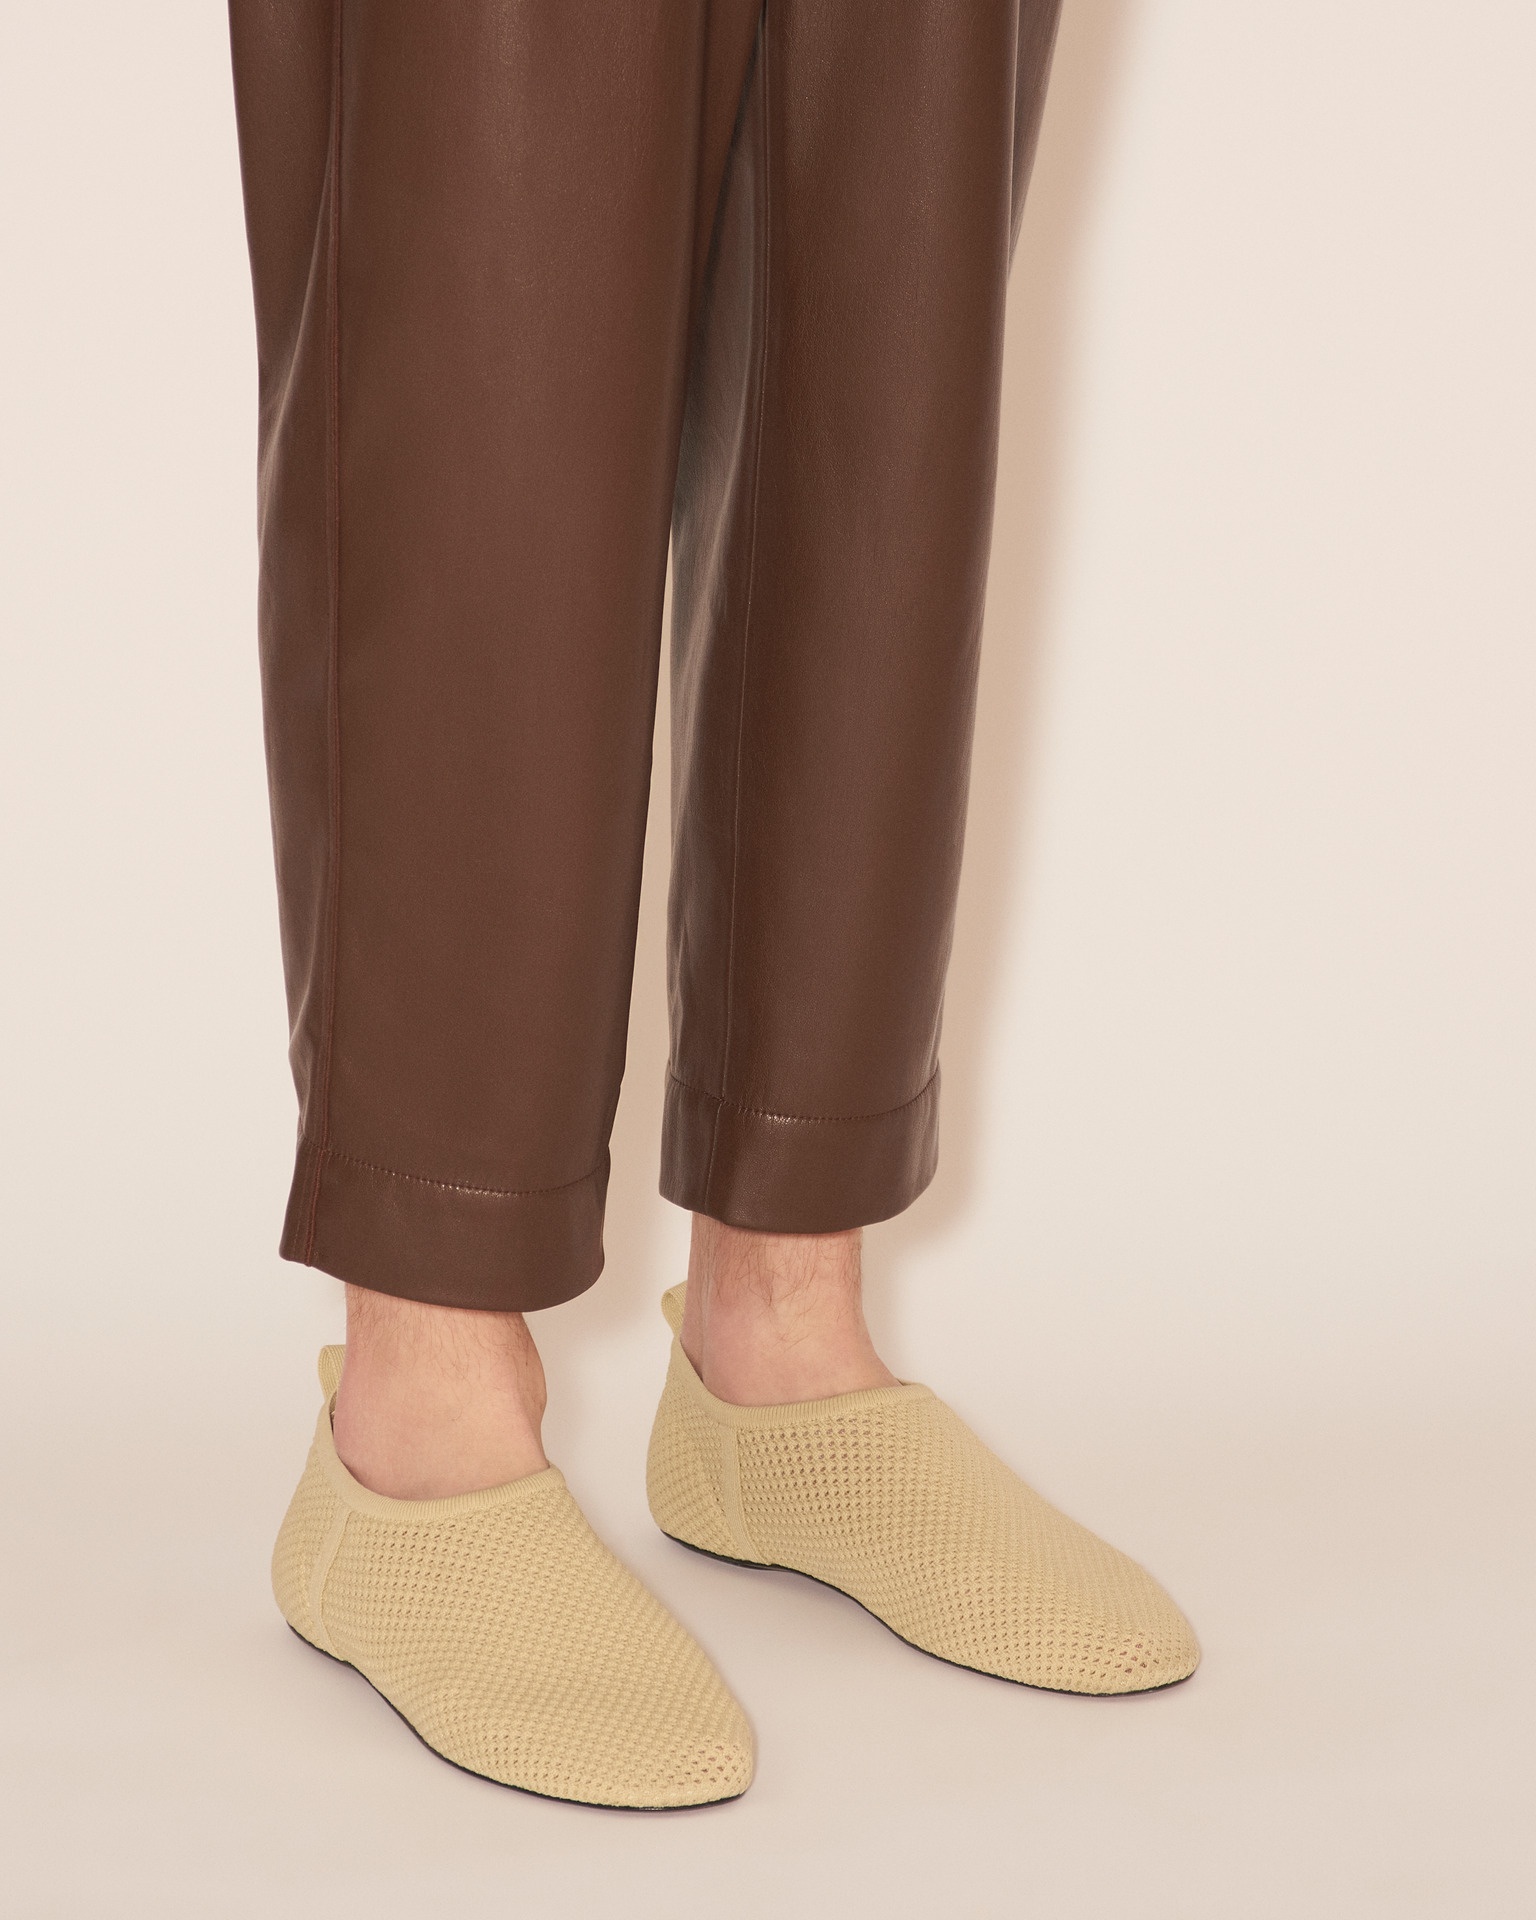 JAIN - Relaxed pants - Dark brown - 5